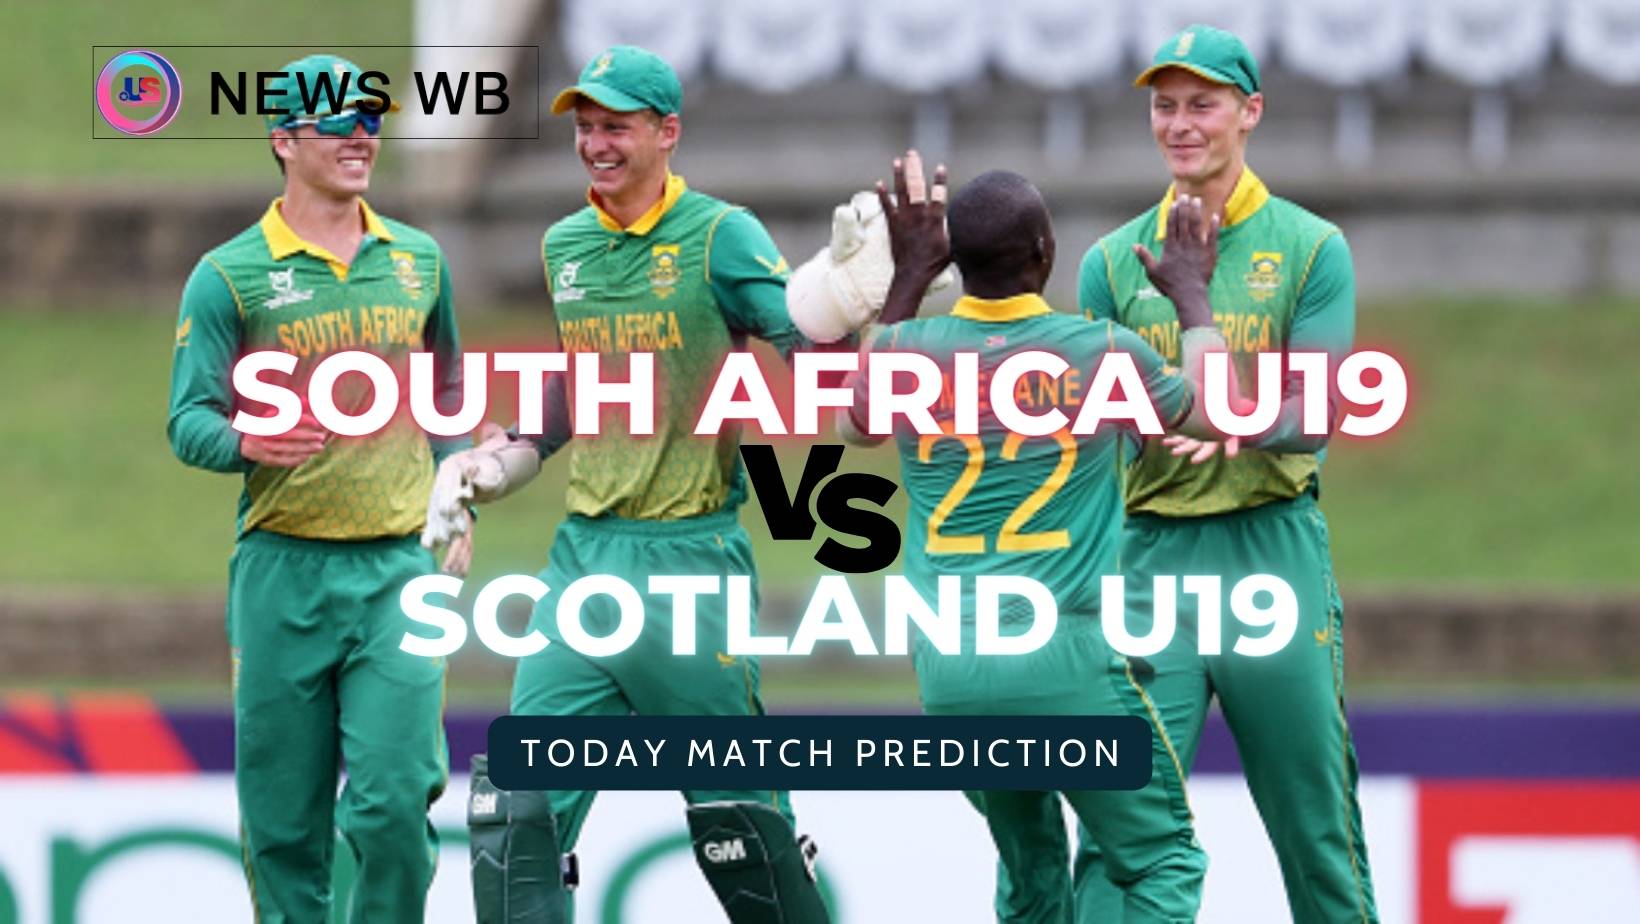 Today Match Prediction: RSA U19 vs SCO U19 Dream11 Team, South Africa U19 vs Scotland U19 21st Match, Group B, Who Will Win?